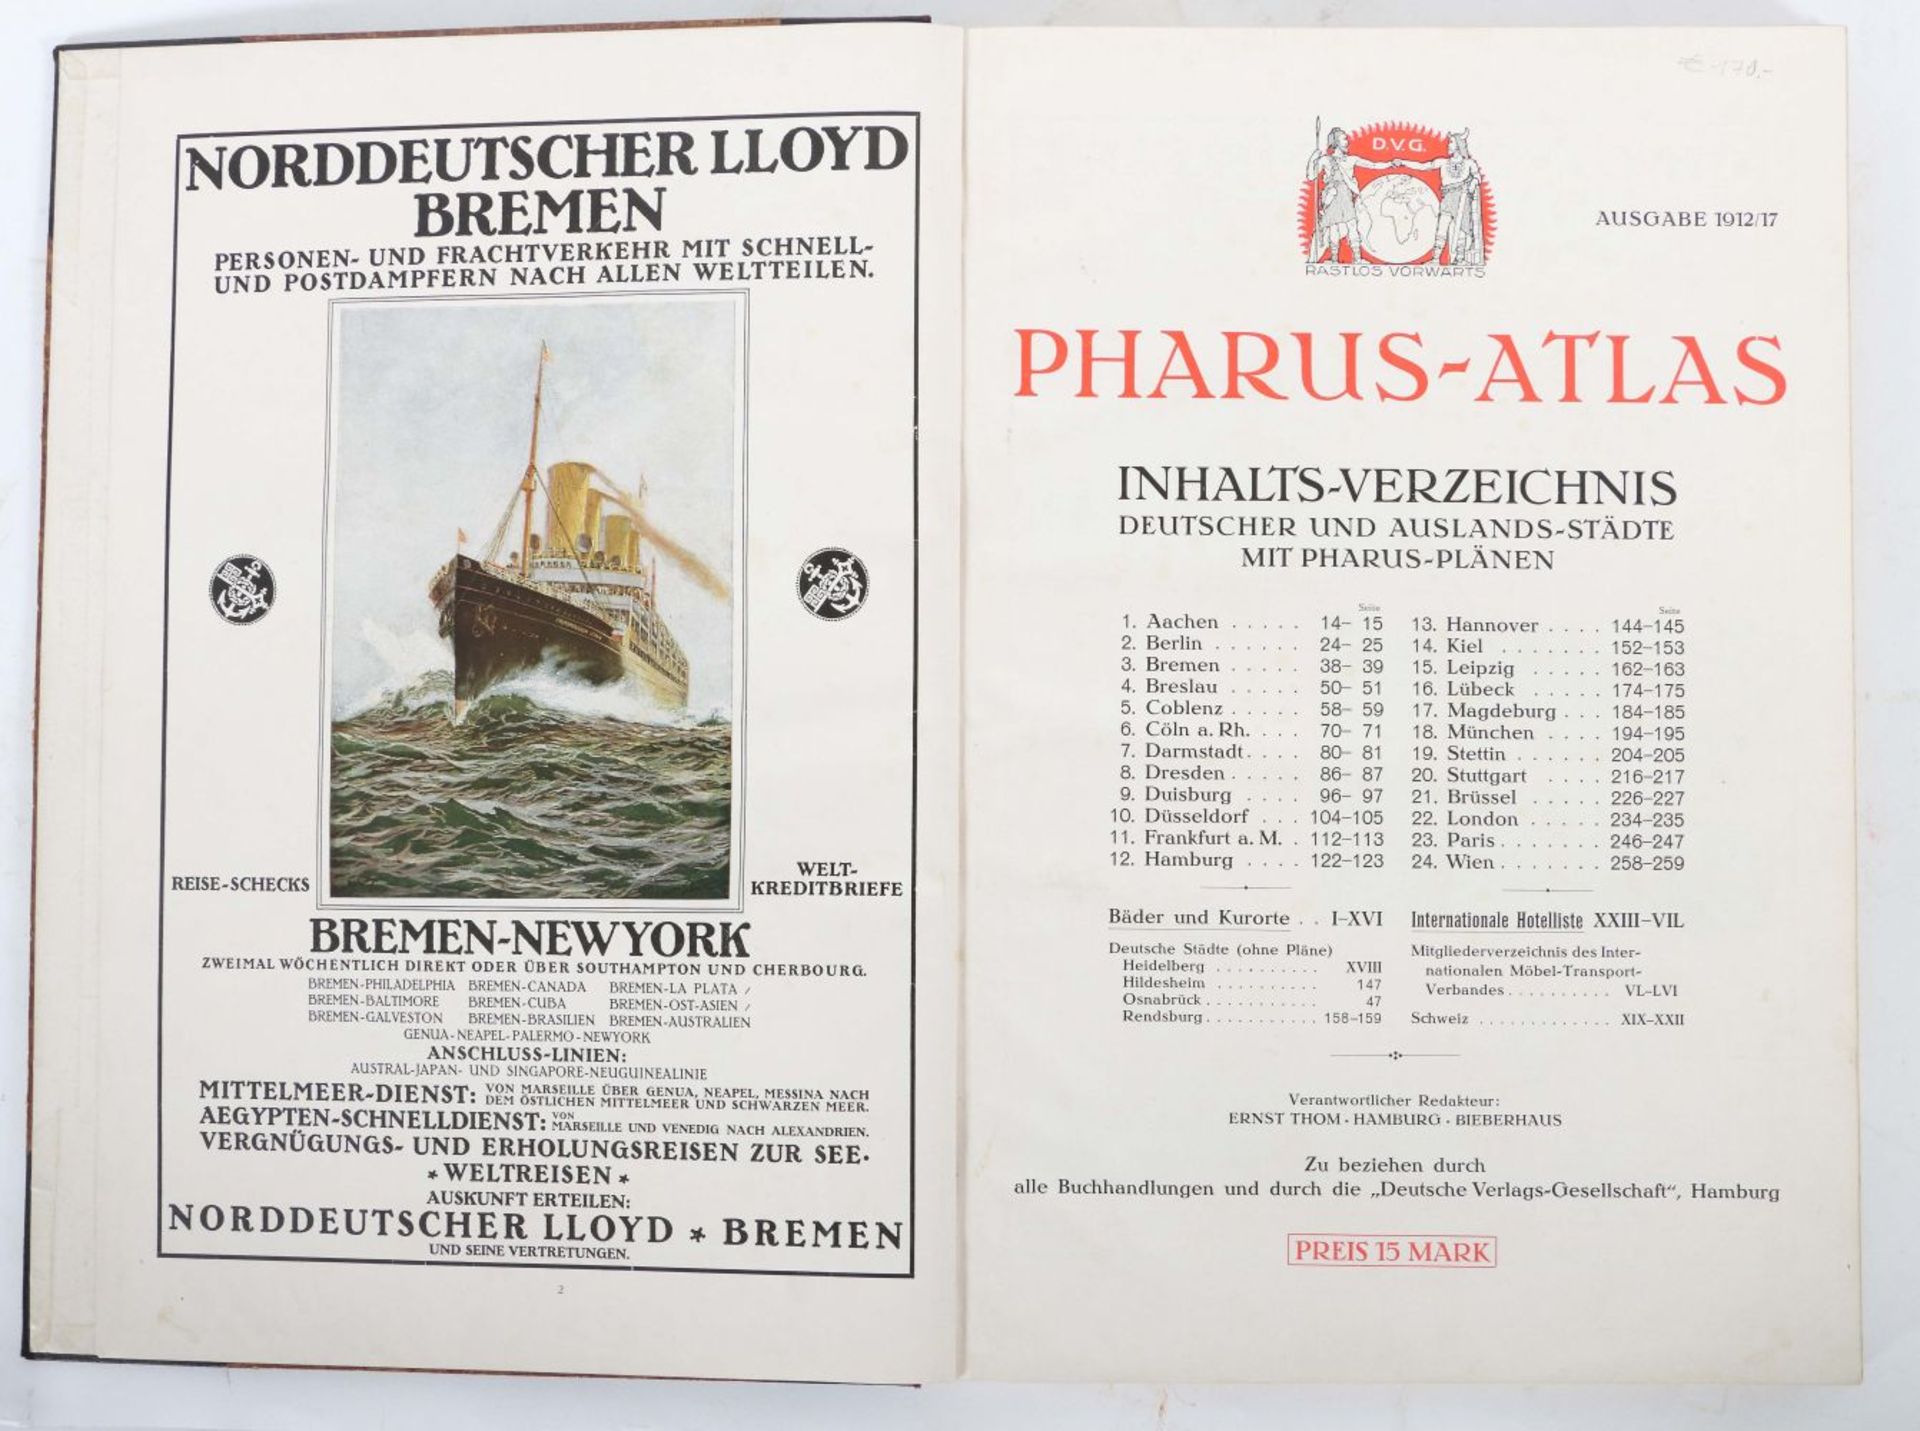 Pharus-Atlas Inhalts-Verzeichnis - Image 2 of 4